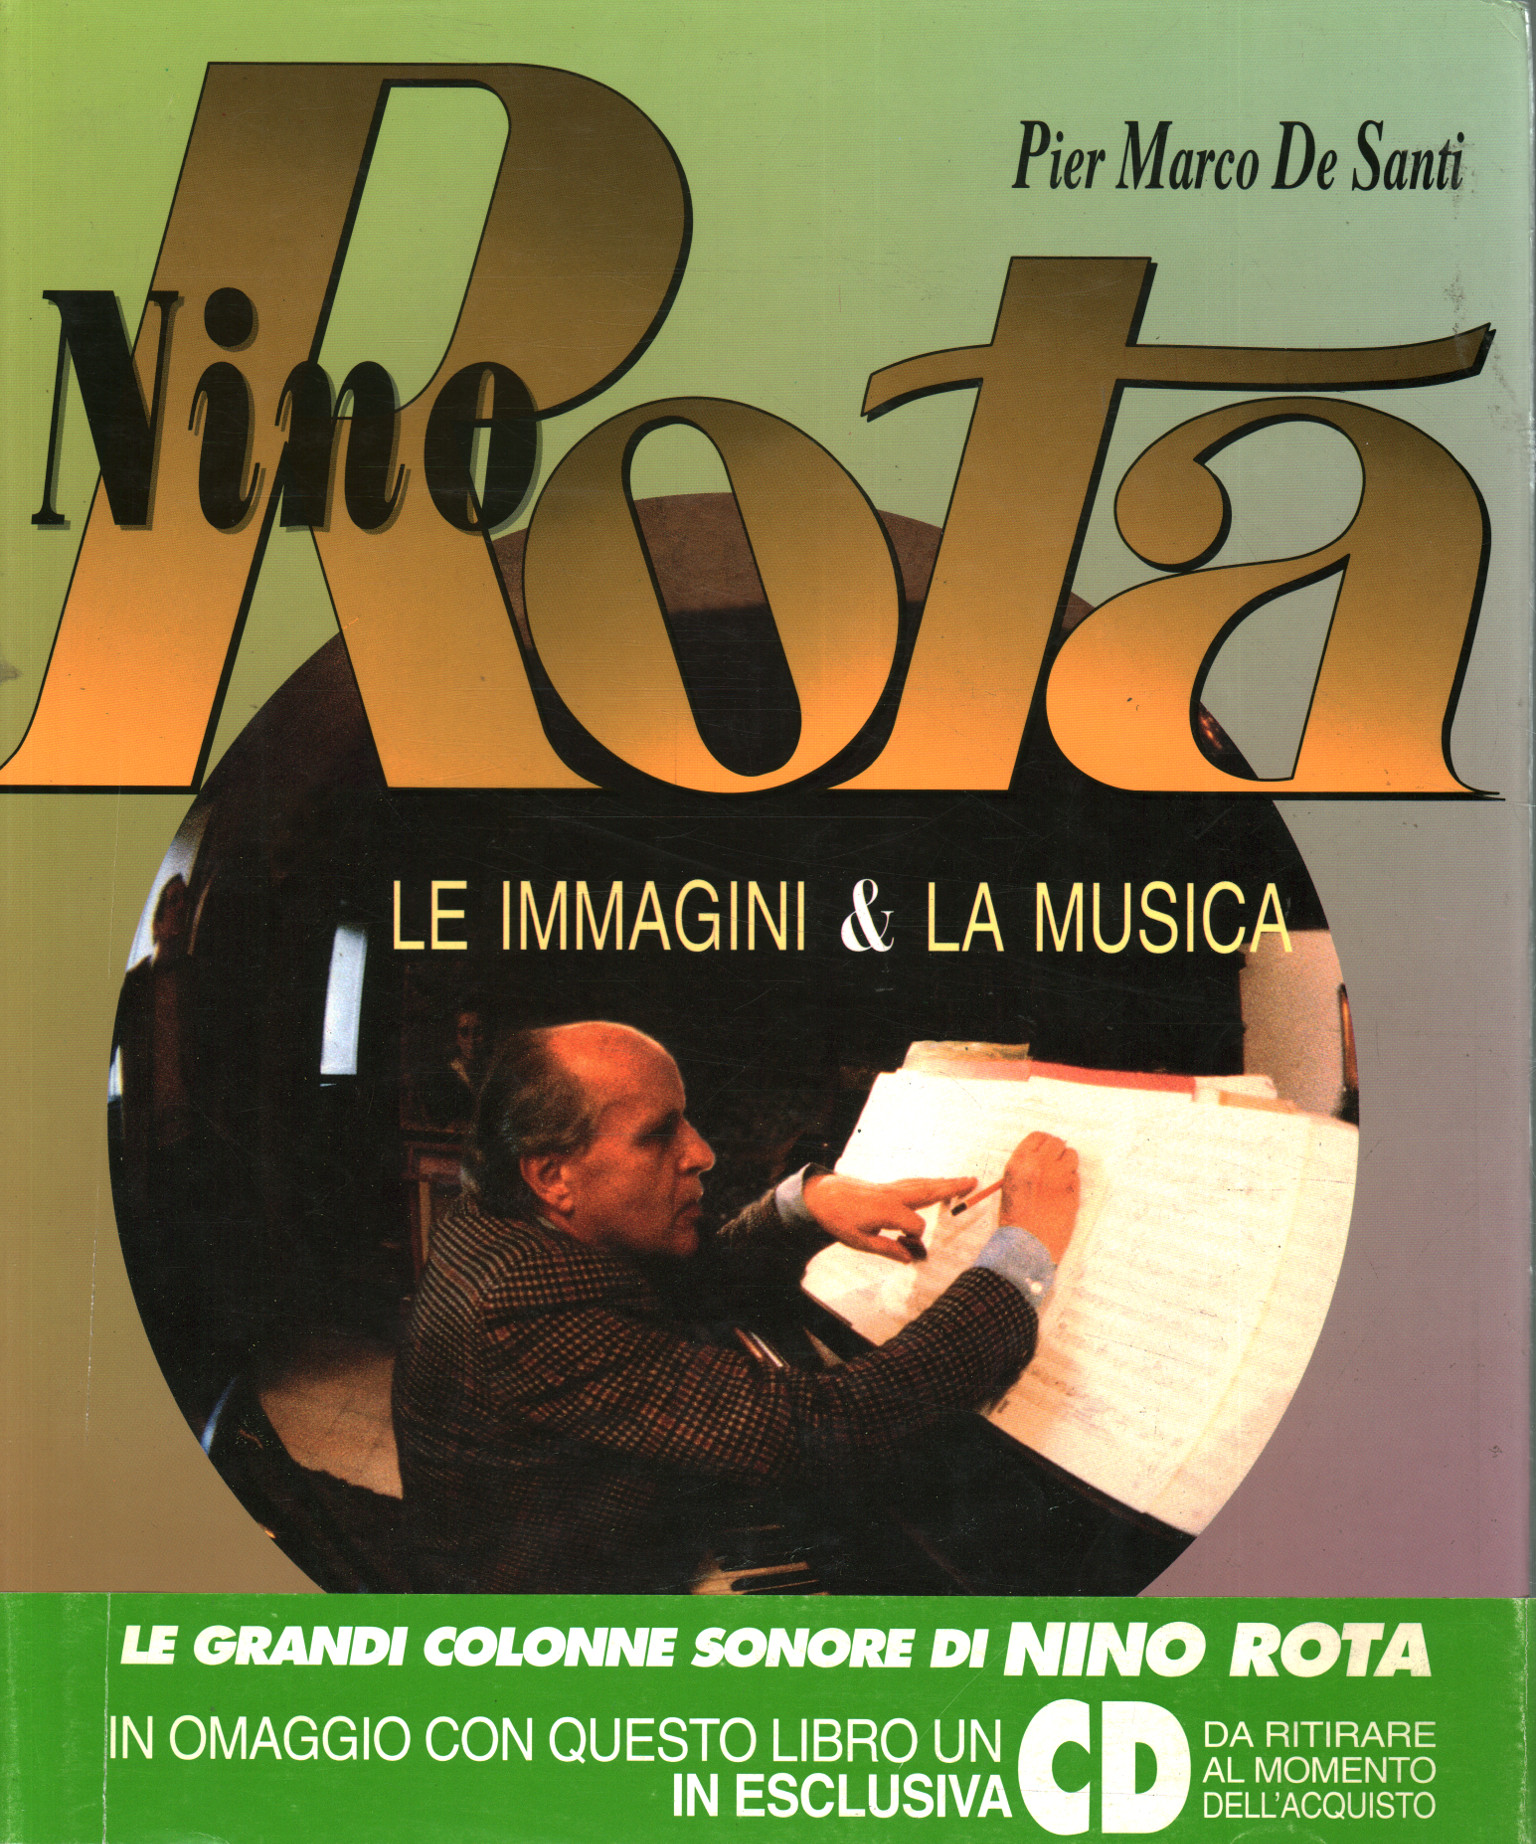 Nino Rota. Images & music, Pier Marco De Santi